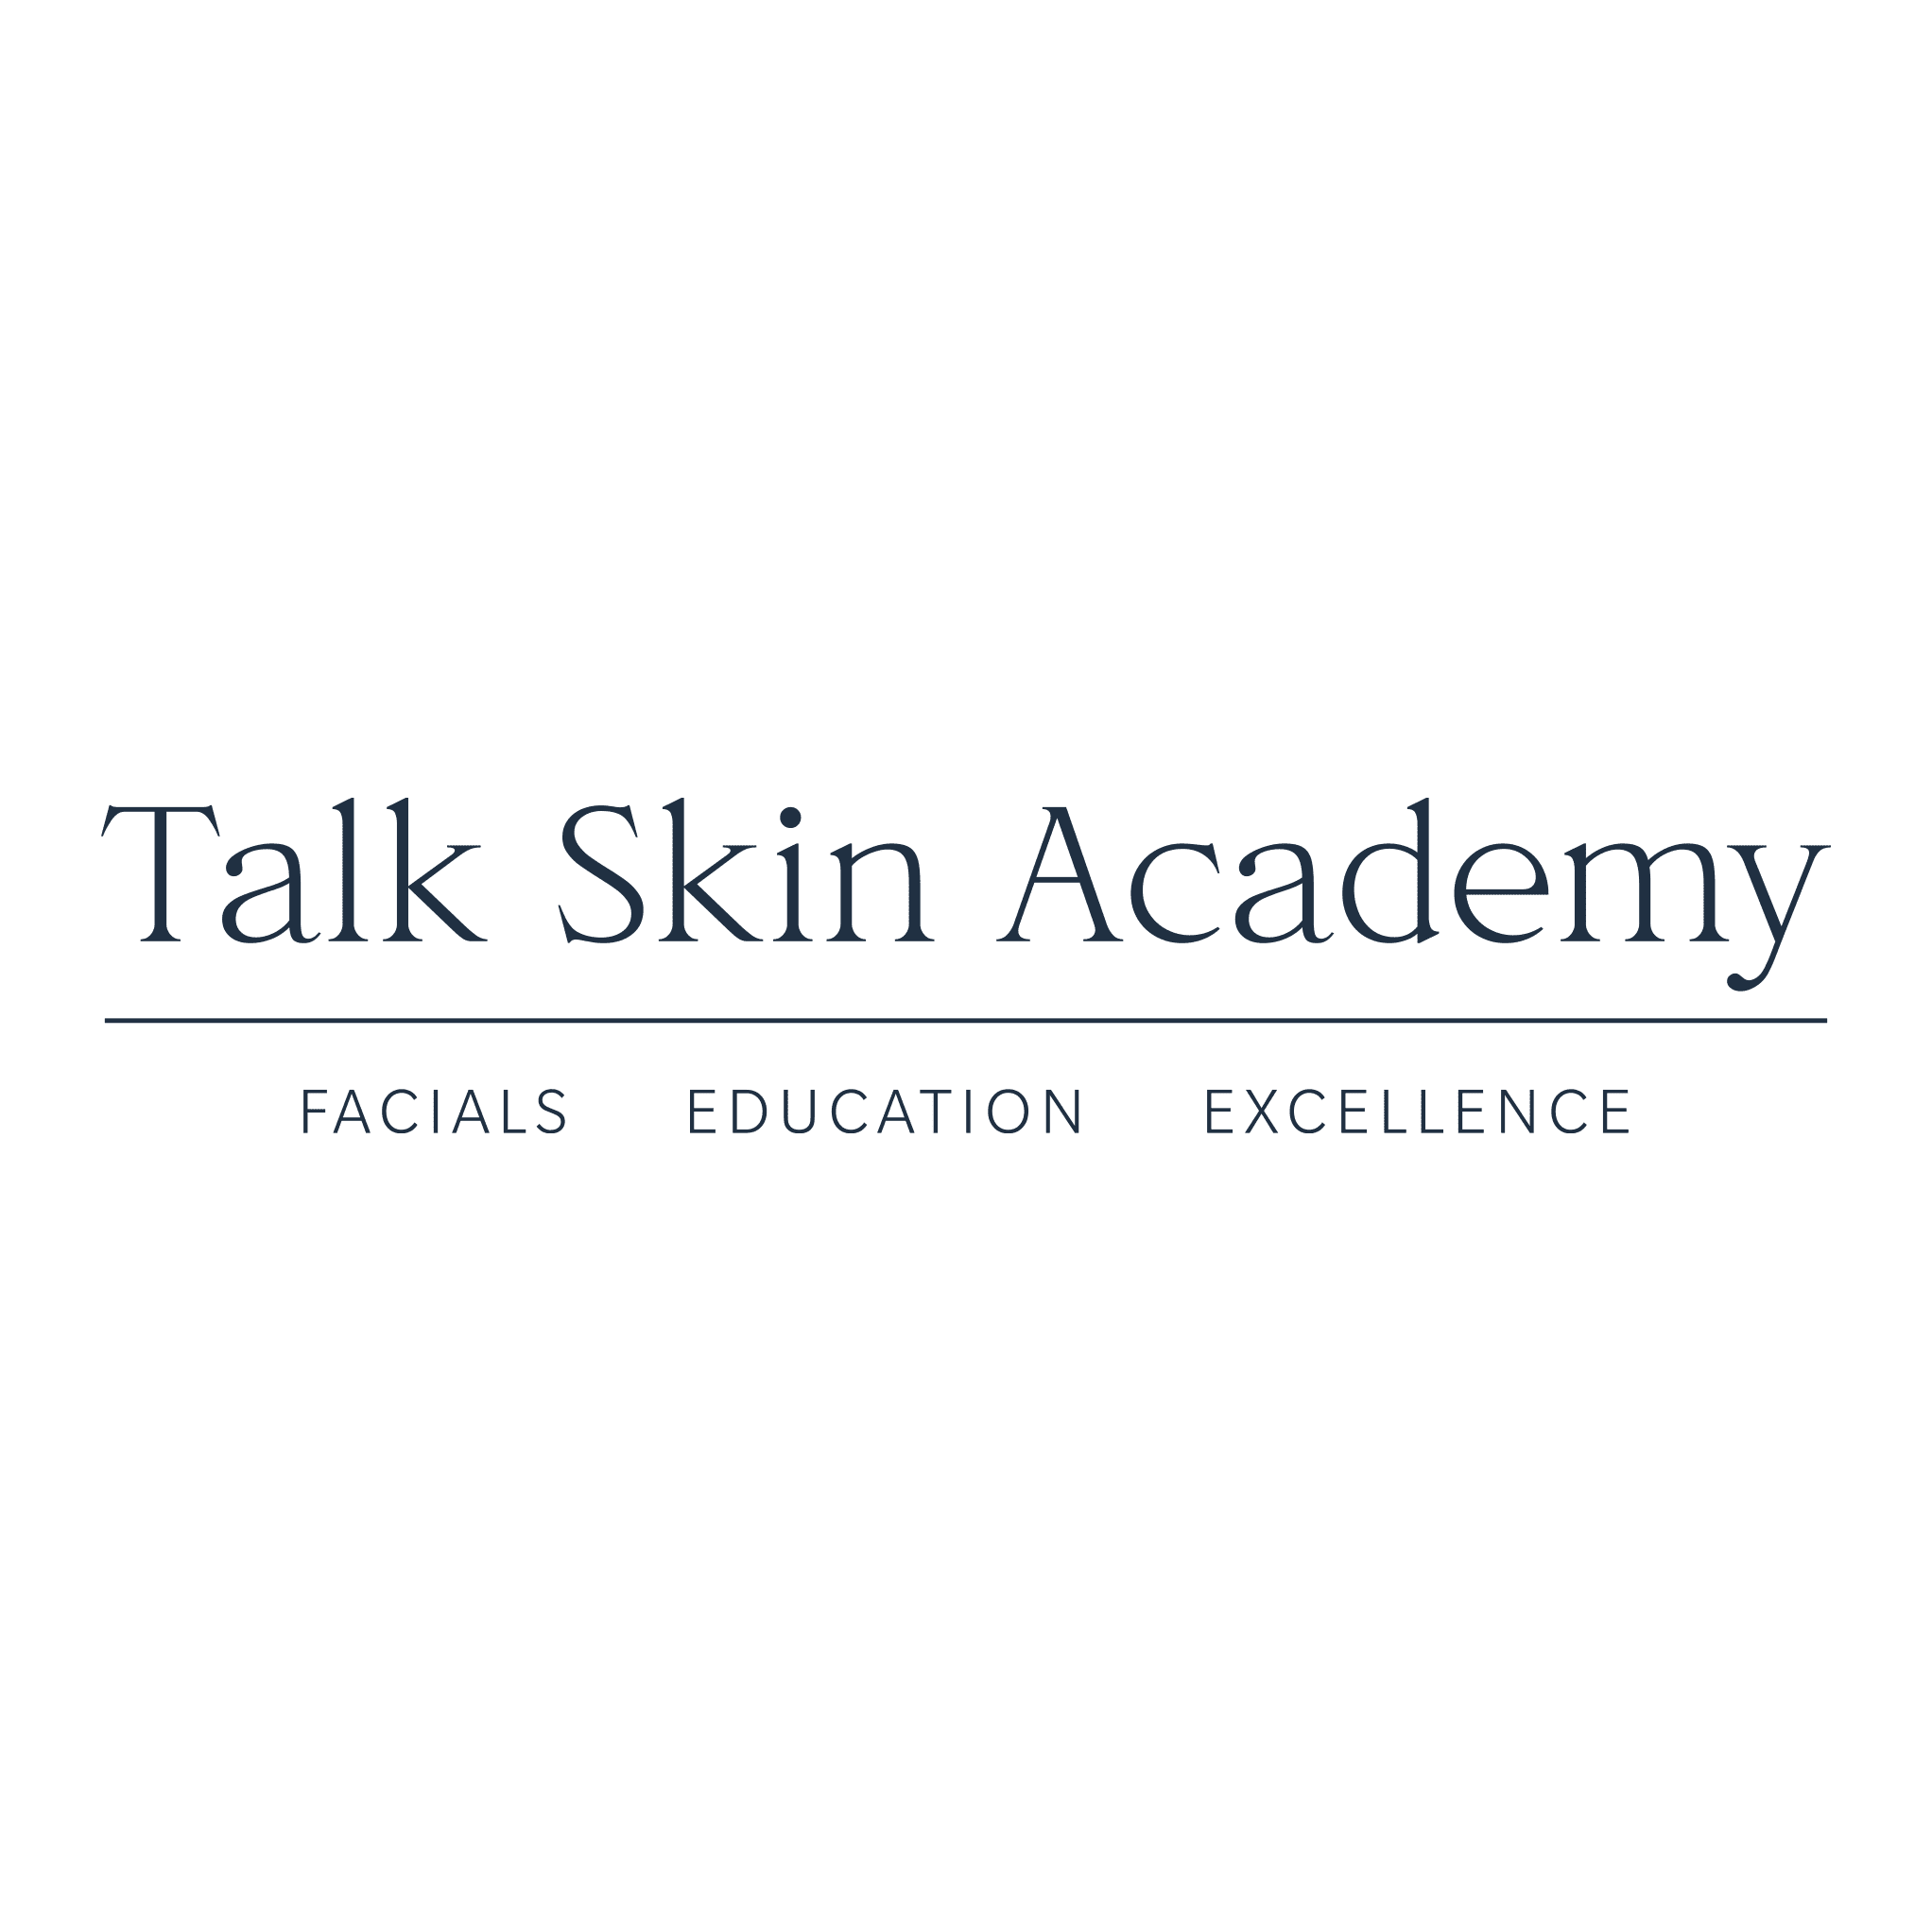 Talk Skin Academy